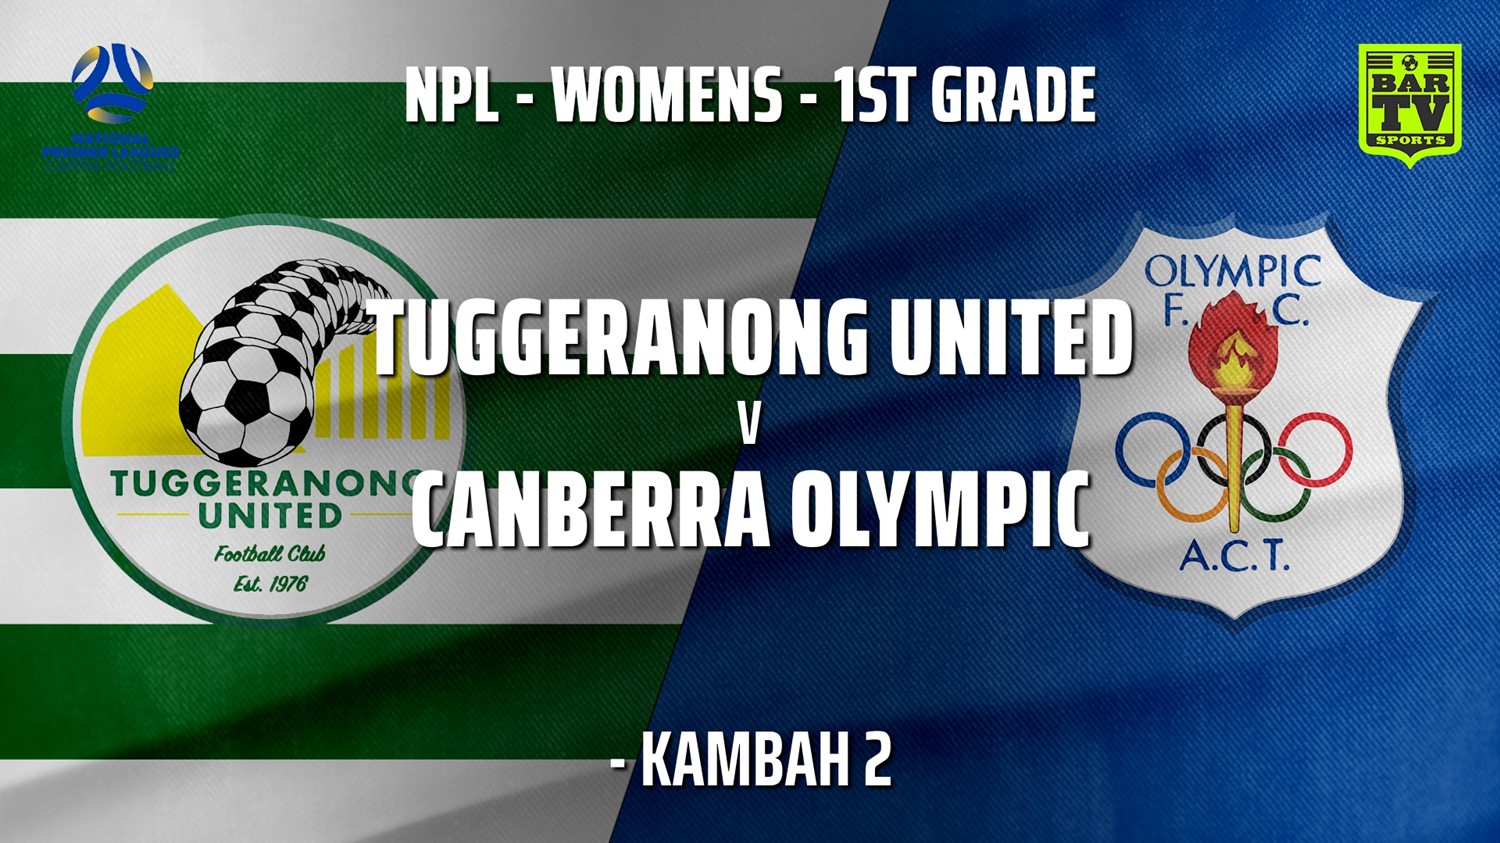 210524-NPLW - Capital Tuggeranong United FC (women) v Canberra Olympic FC (women) Minigame Slate Image